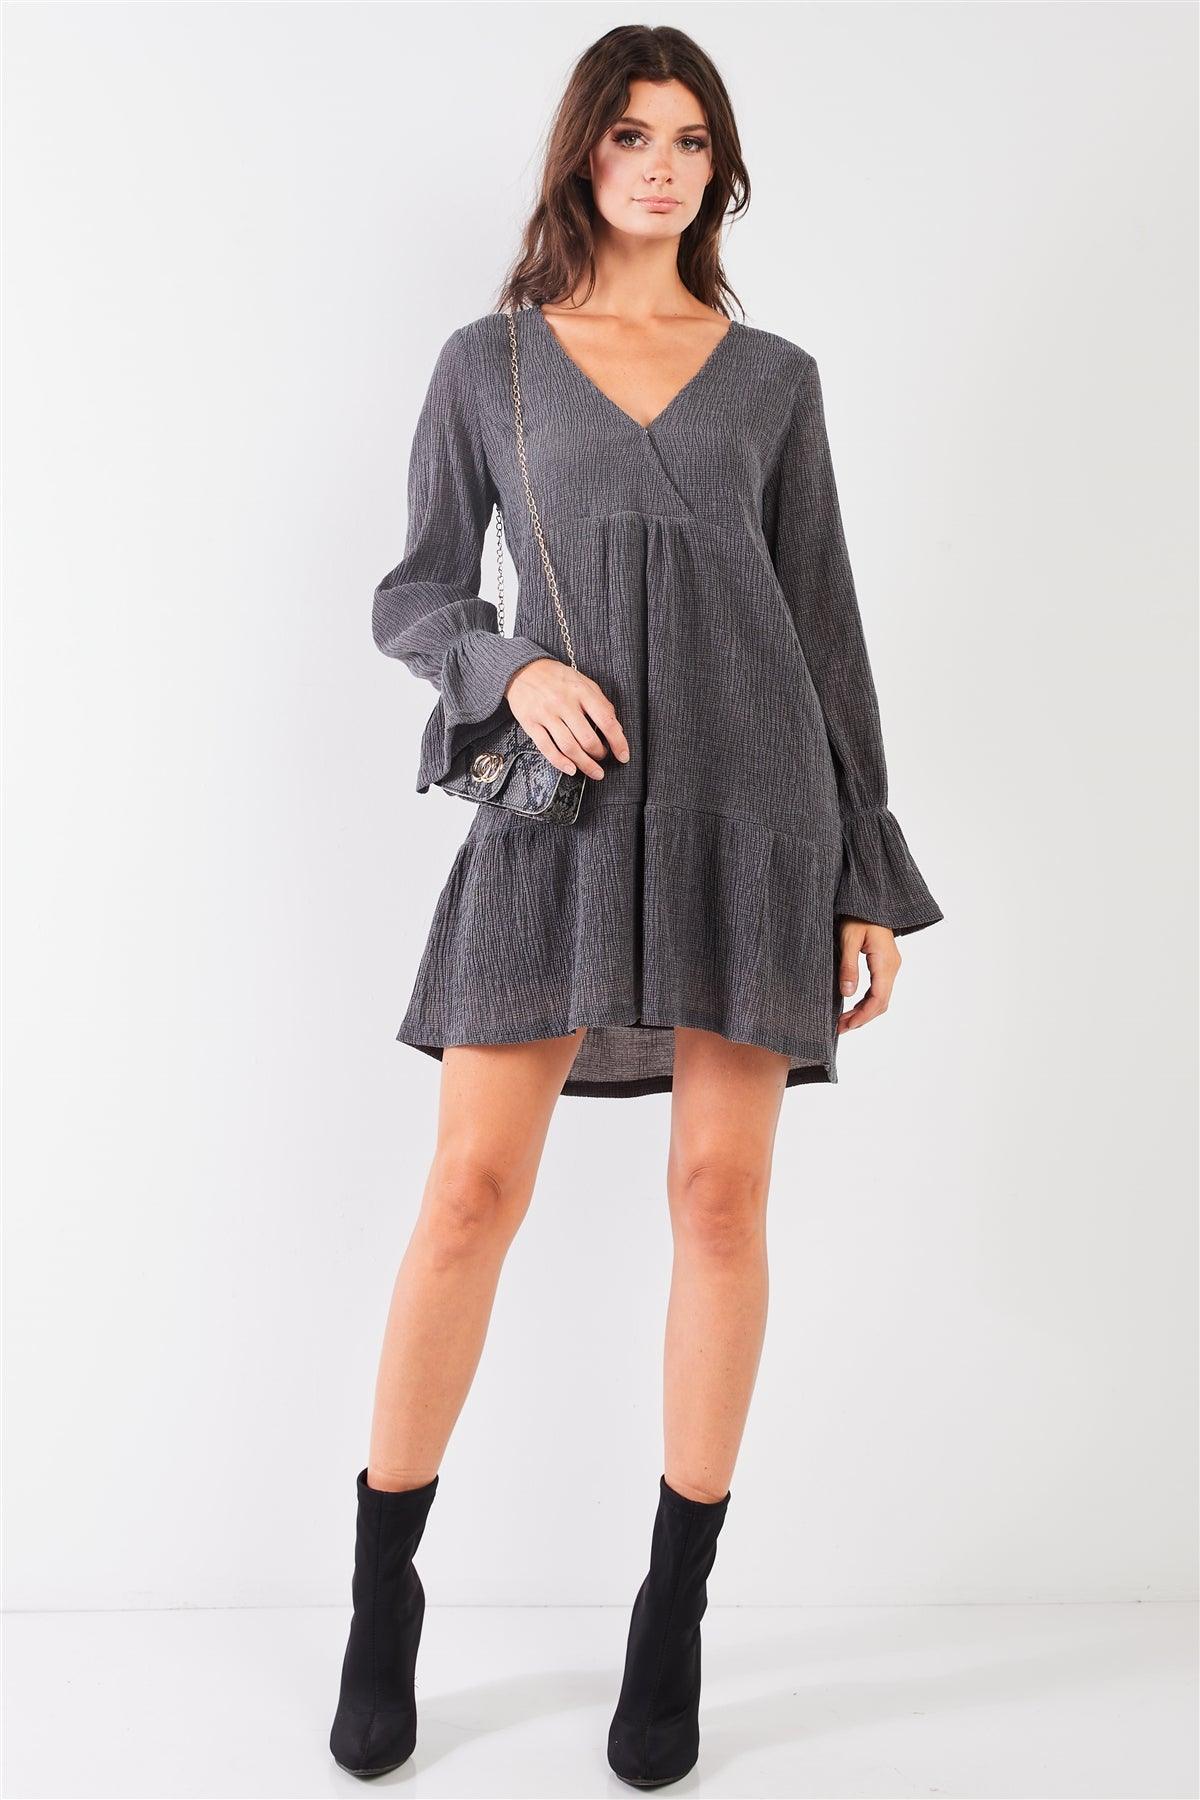 Charcoal Plunging V-Neck High-Waist Long Flare Sleeve Mini Dress /2-2-2